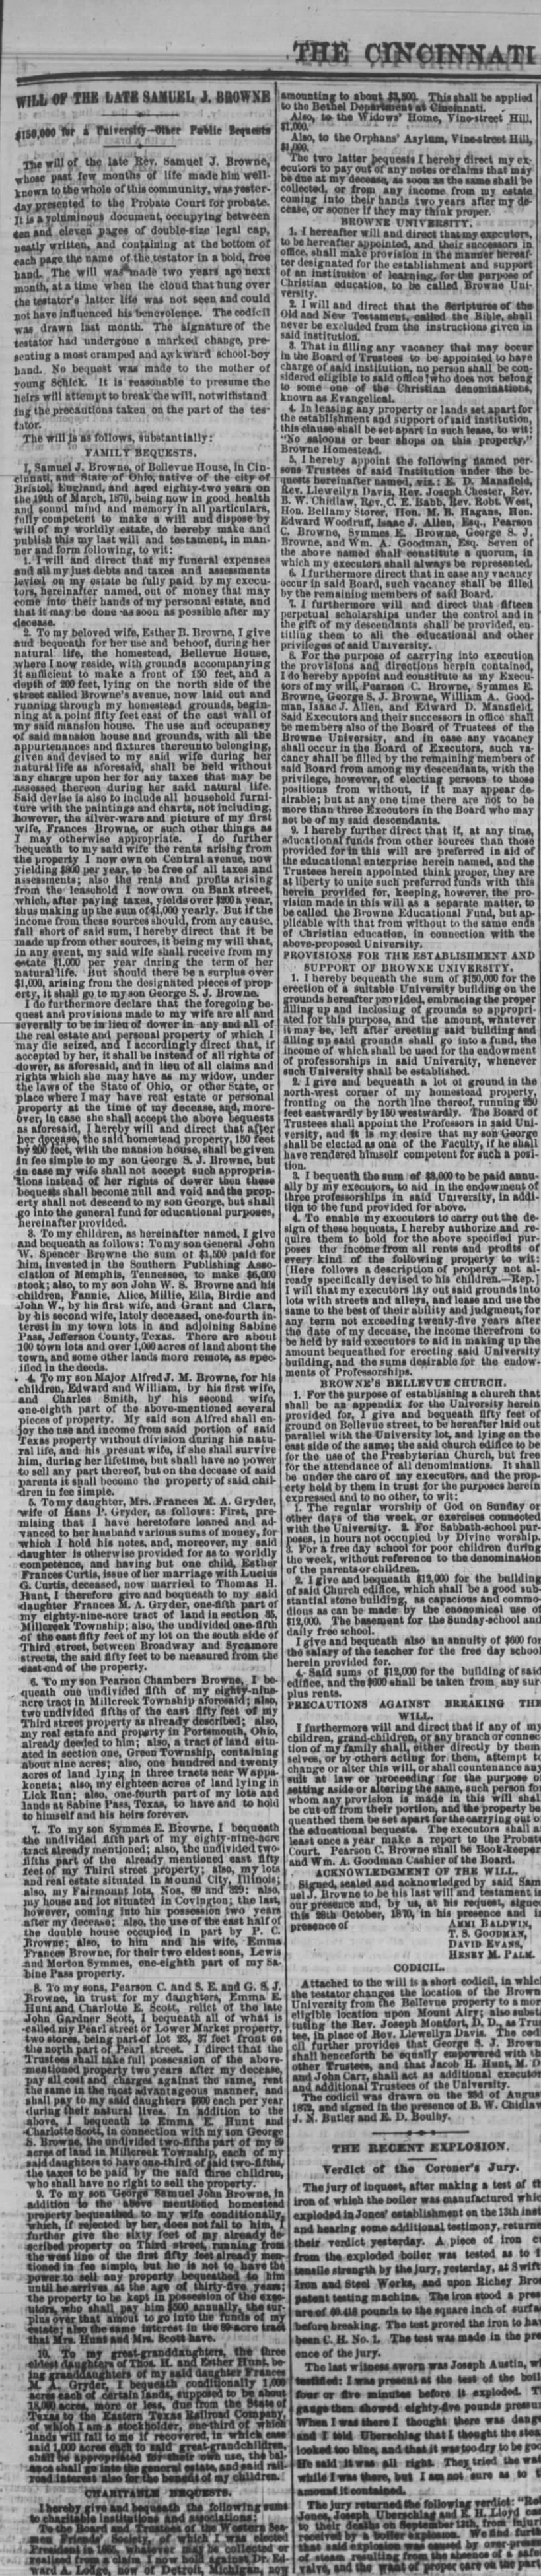 Will of Samuel J. Browne_University bequest_Eastern Texas Railroad_1872